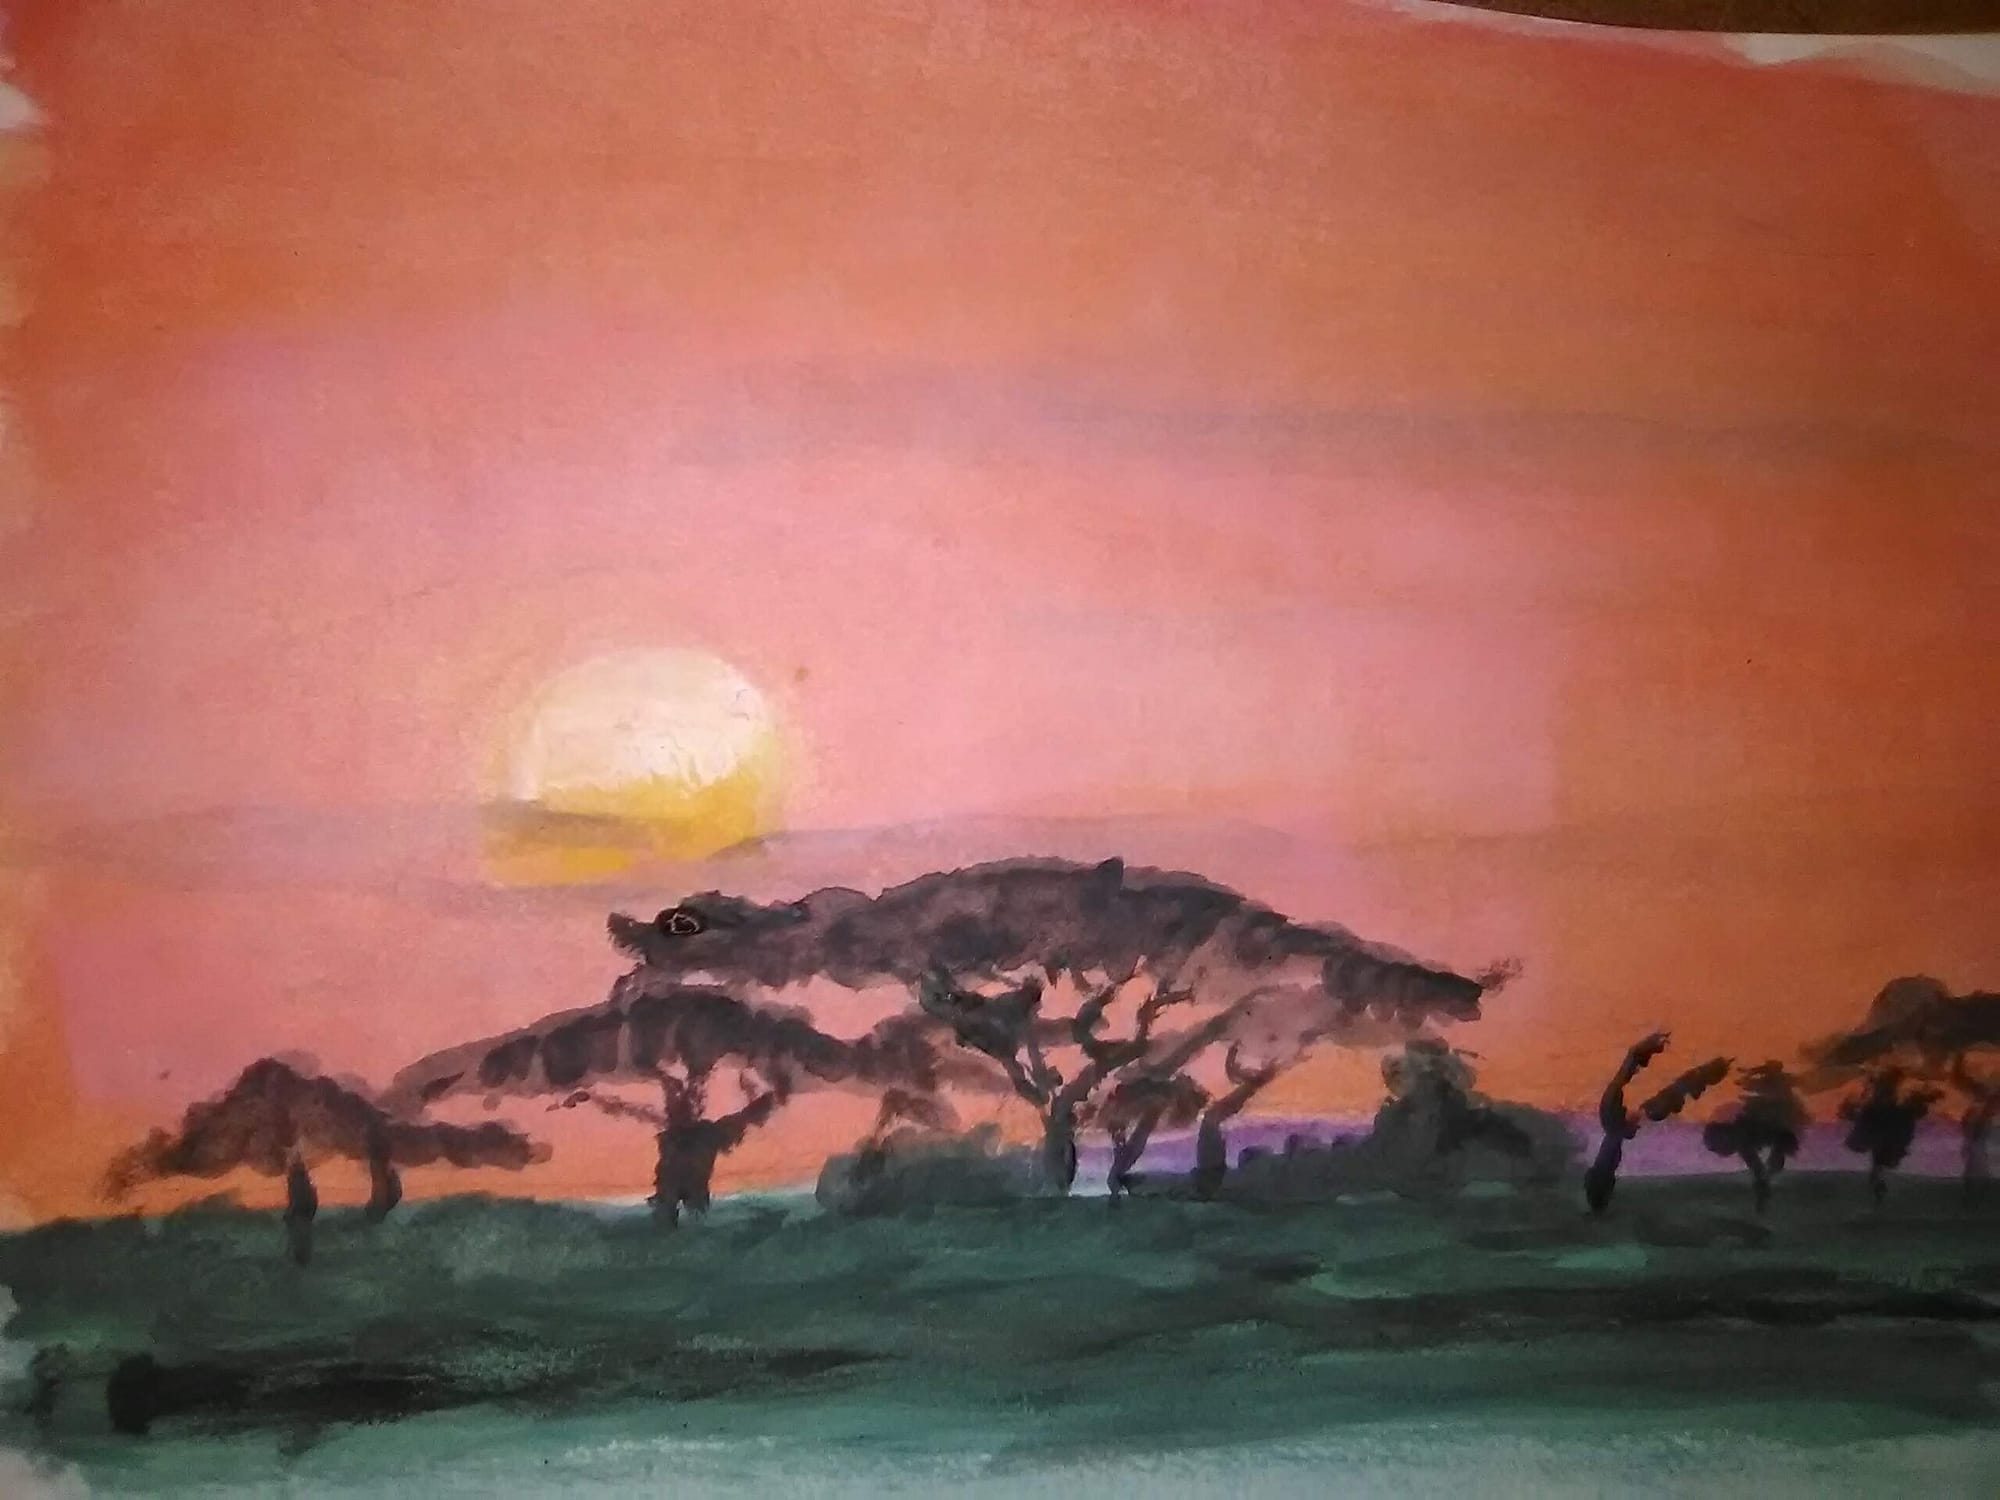 watercolor #14 - serengeti sunrise